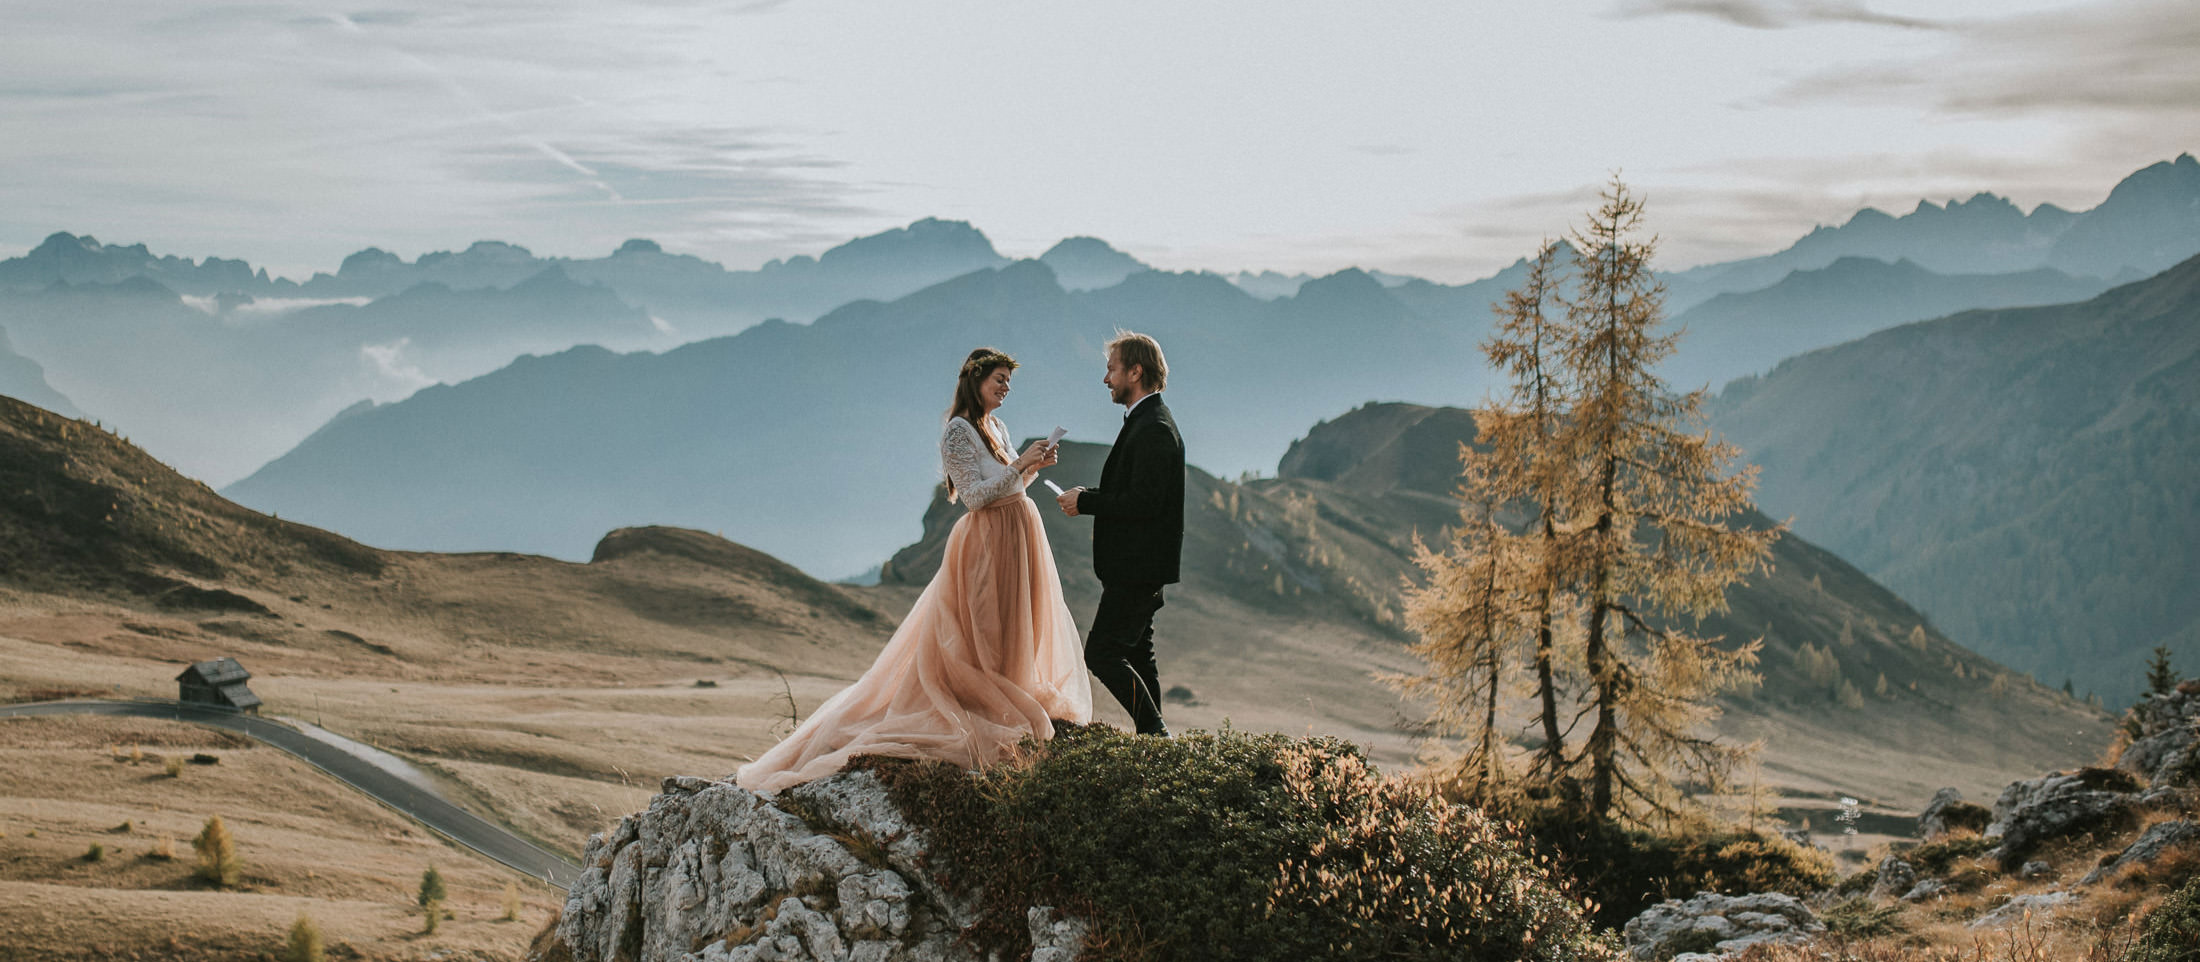 Vow renewal among mesmerizing landscapes of Italian Dolomites - captured by wedding photographer TS Foto Design